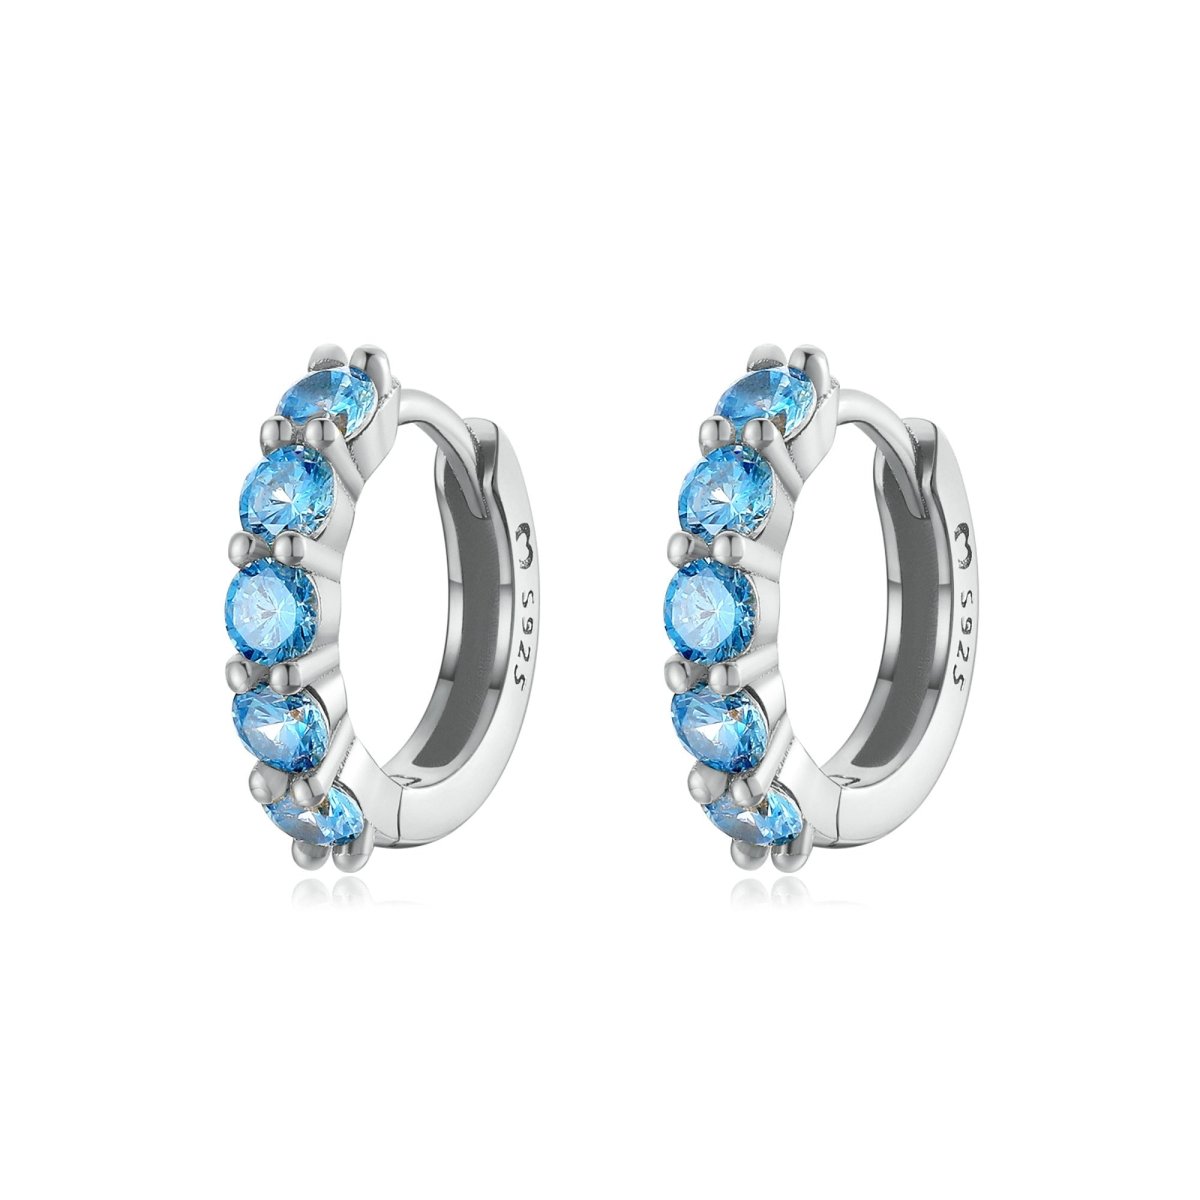 "Marine" Earrings - Milas Jewels Shop